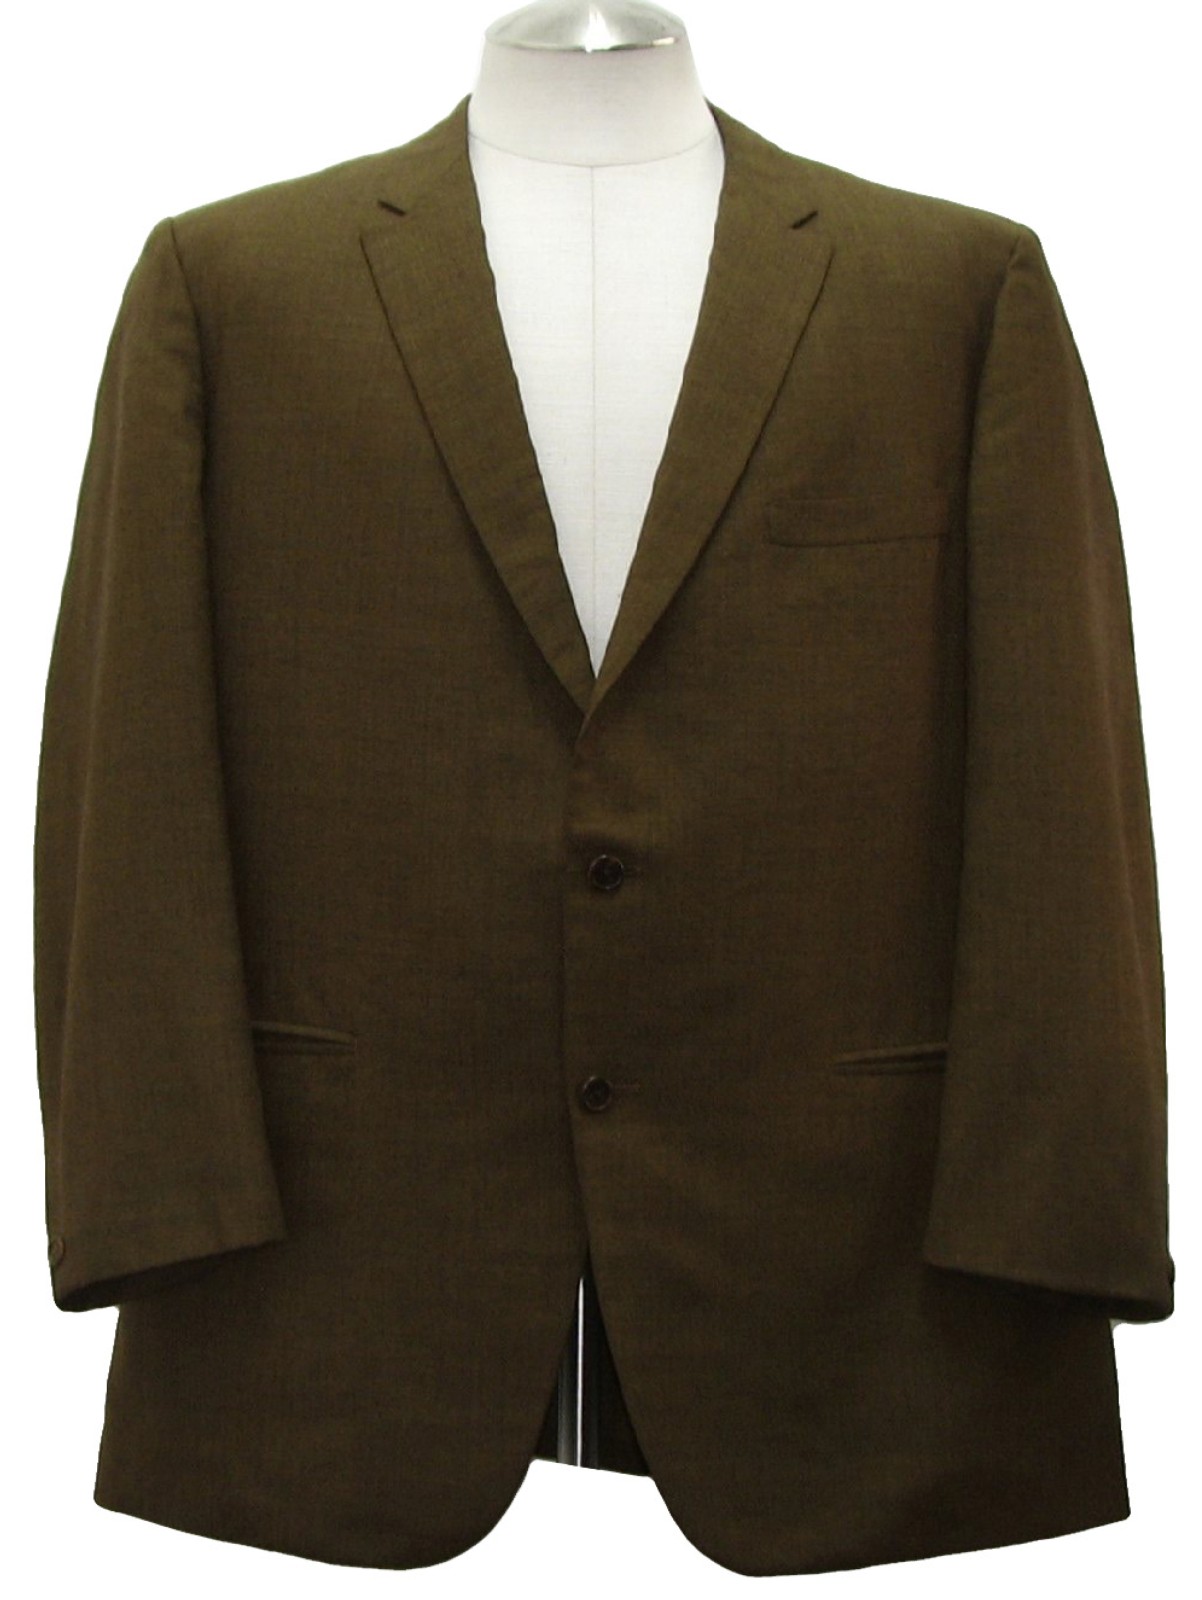 Retro 60s Jacket (Backer Clothes) : 60s -Backer Clothes- Mens brown ...